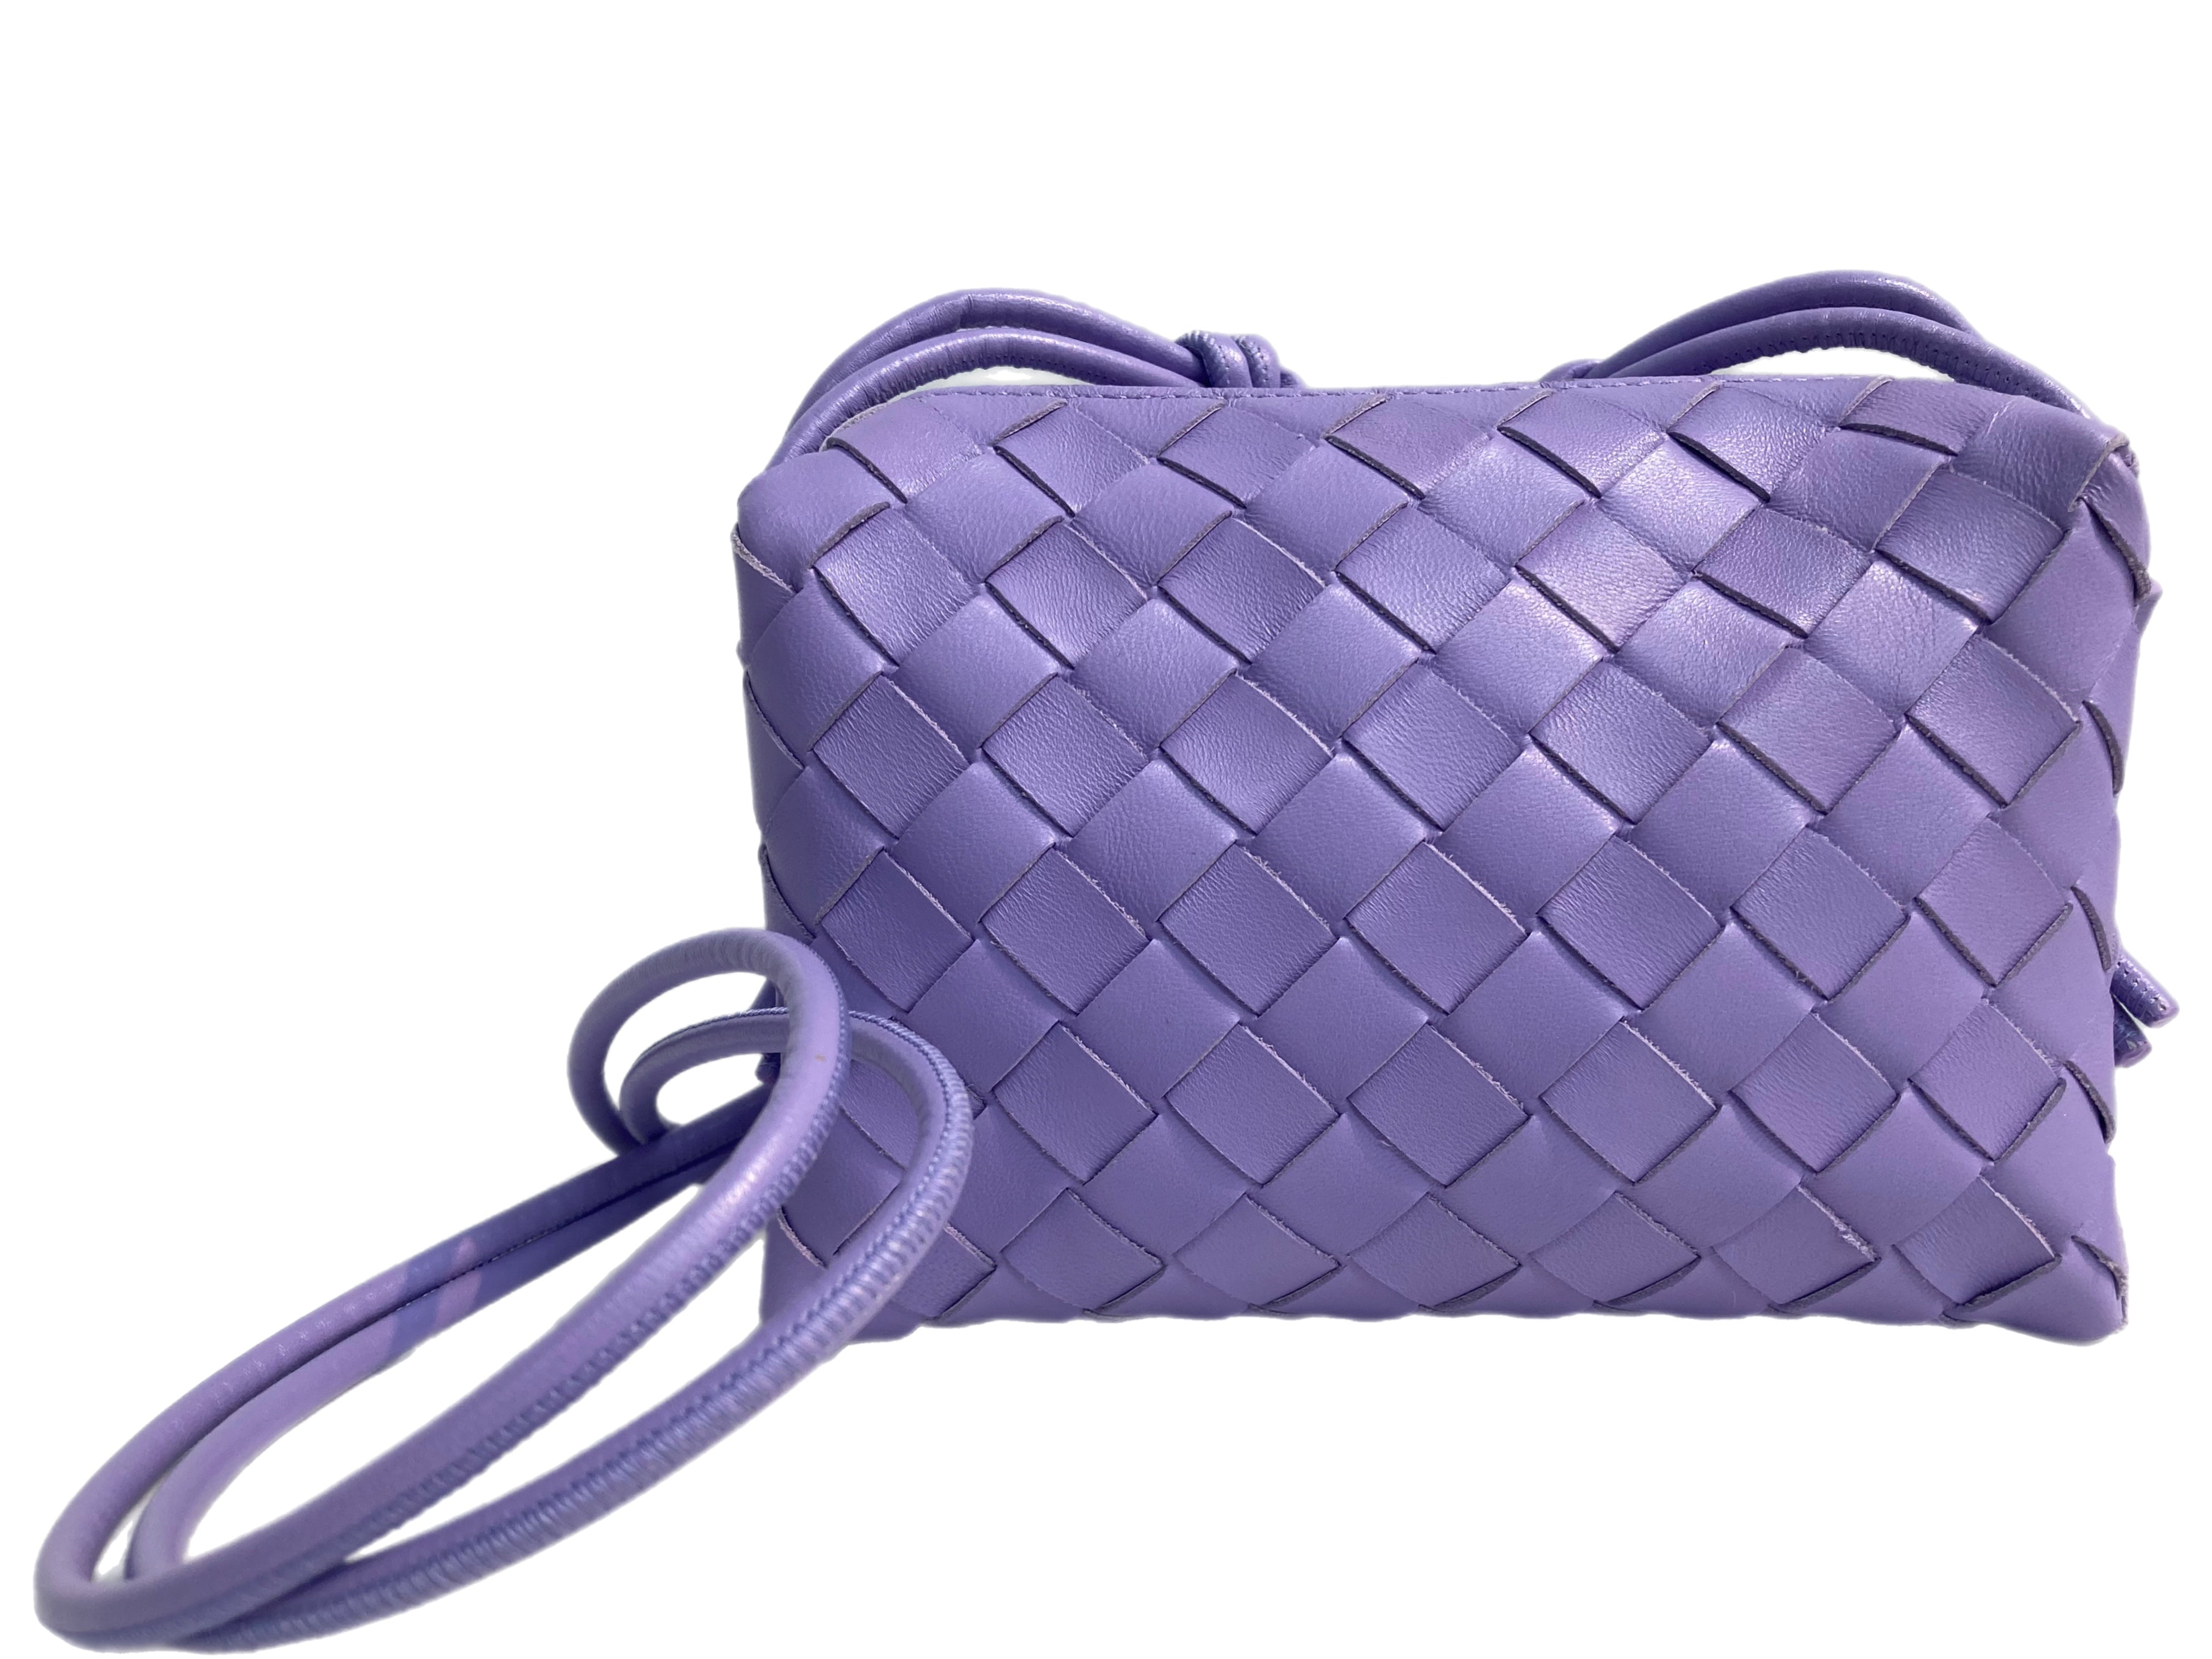 Bottega Veneta Small Point Top Handle Bag in Lavender